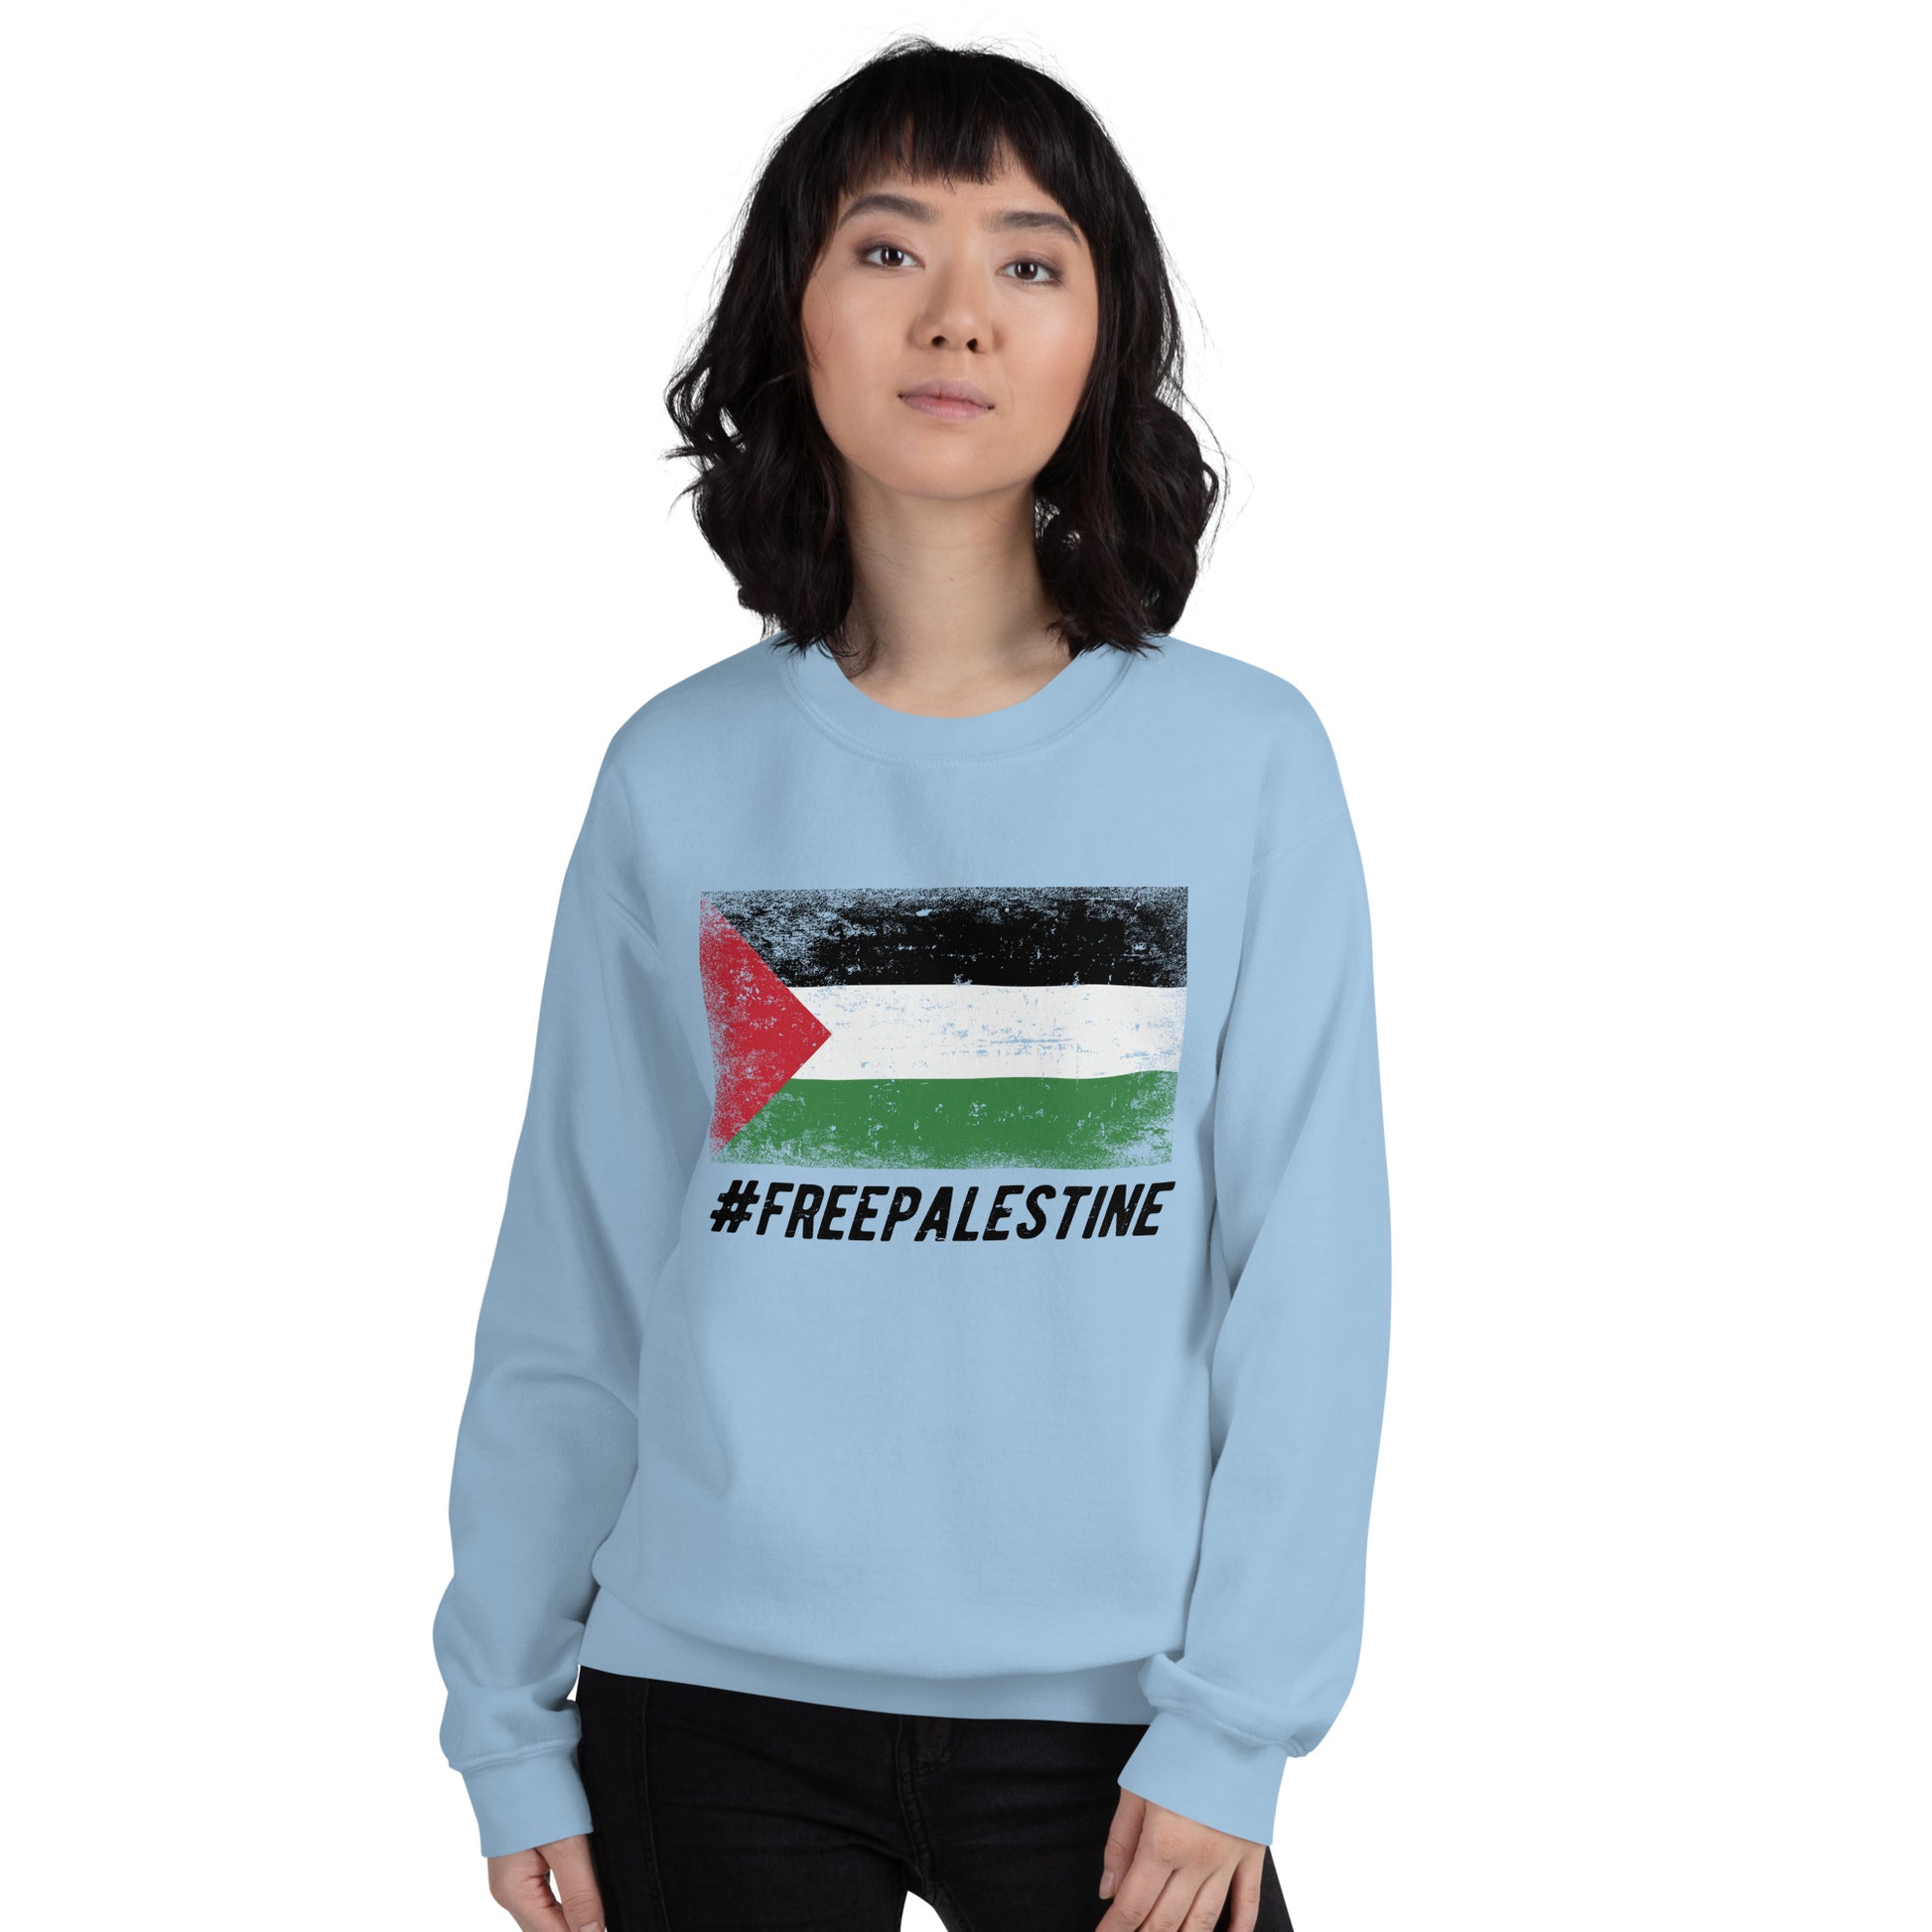 Free Palestine Sweatshirt / Palestine Clothing